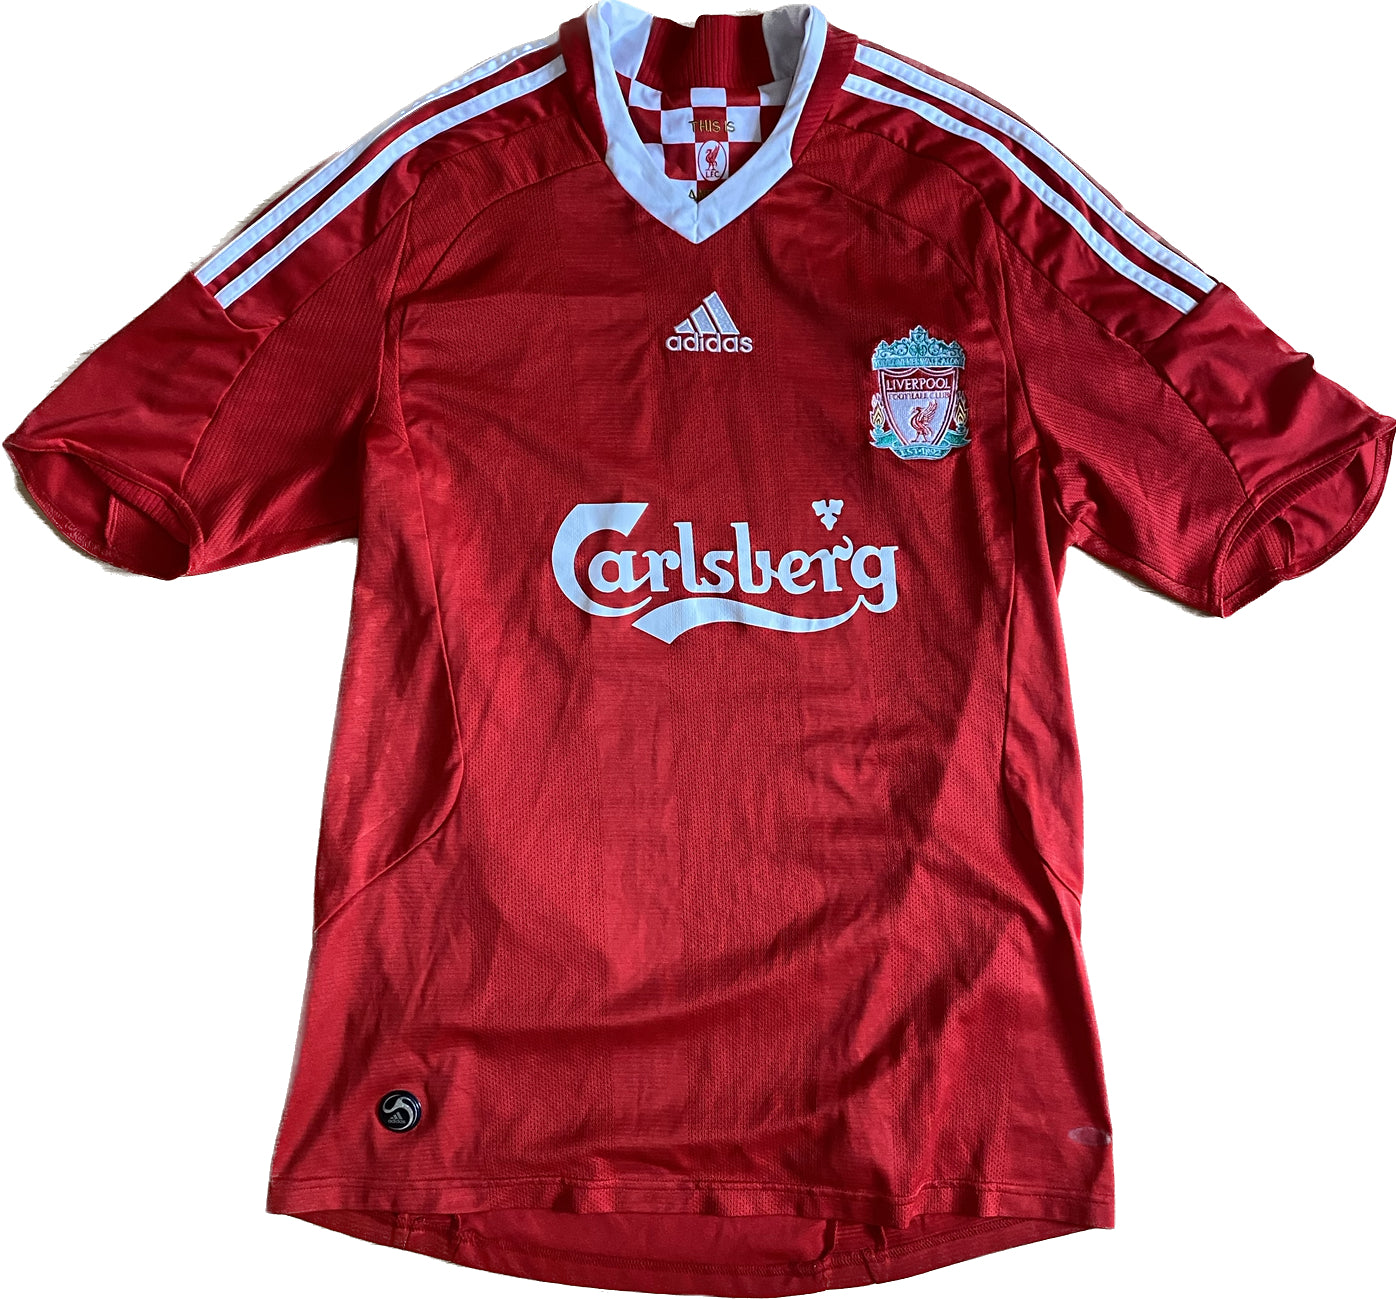 Liverpool 2008-2009 home kit